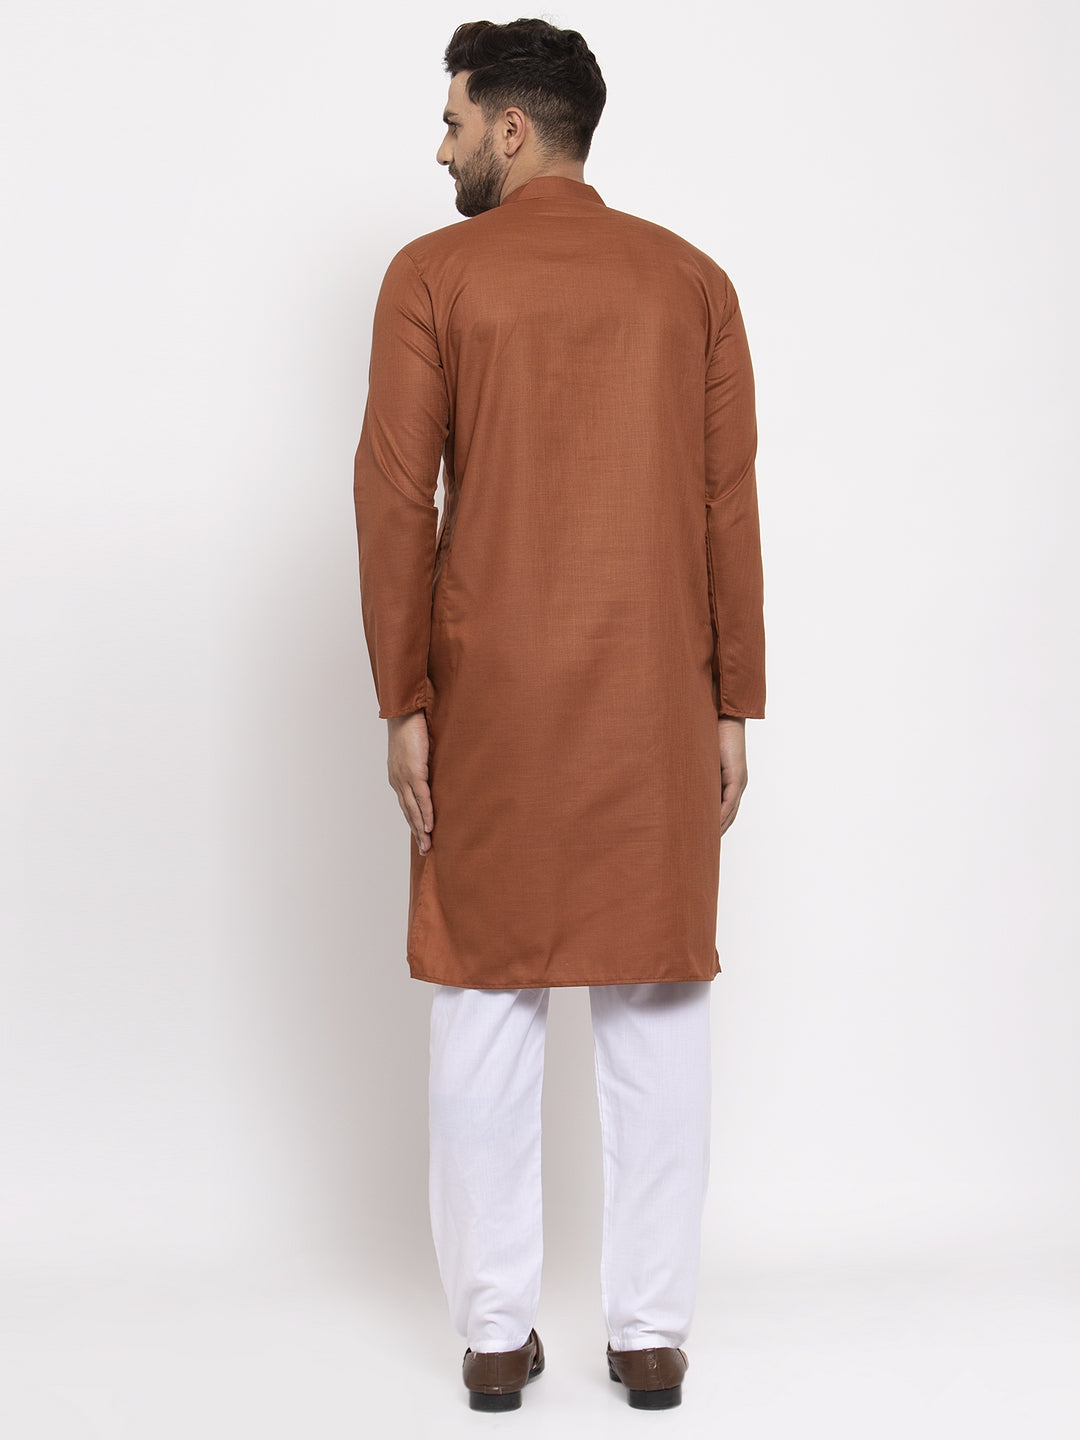 Jompers Men's Brown Cotton Solid Kurta Payjama Sets